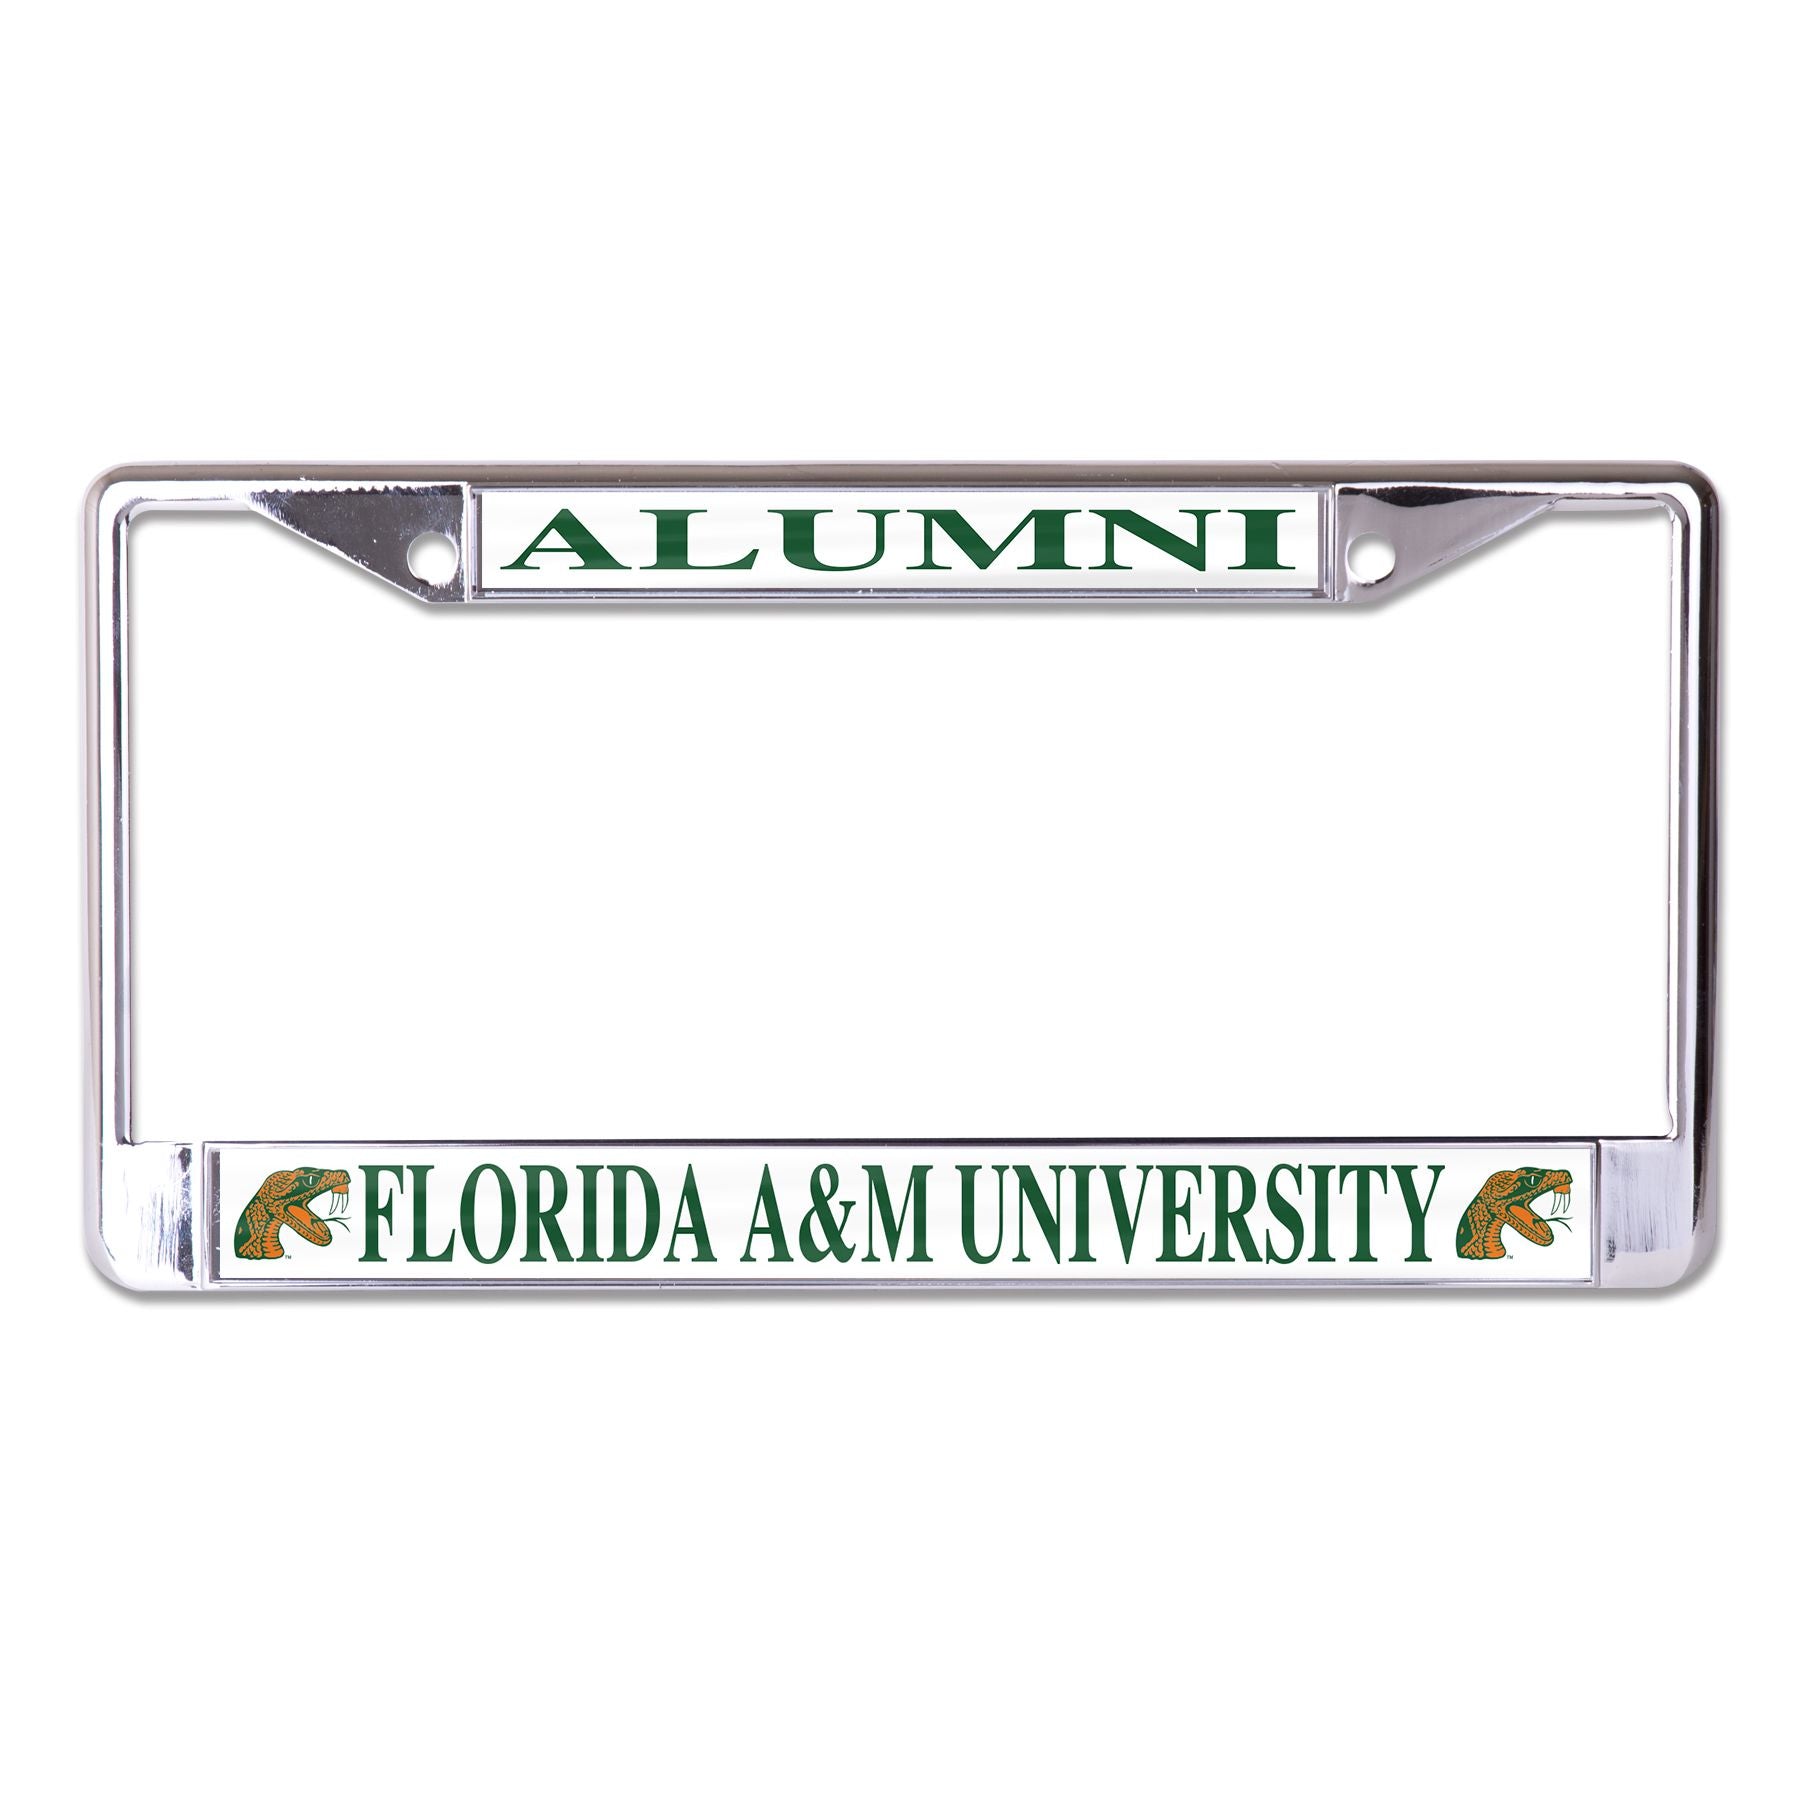 Florida A&M University Alumni License Plate Frame